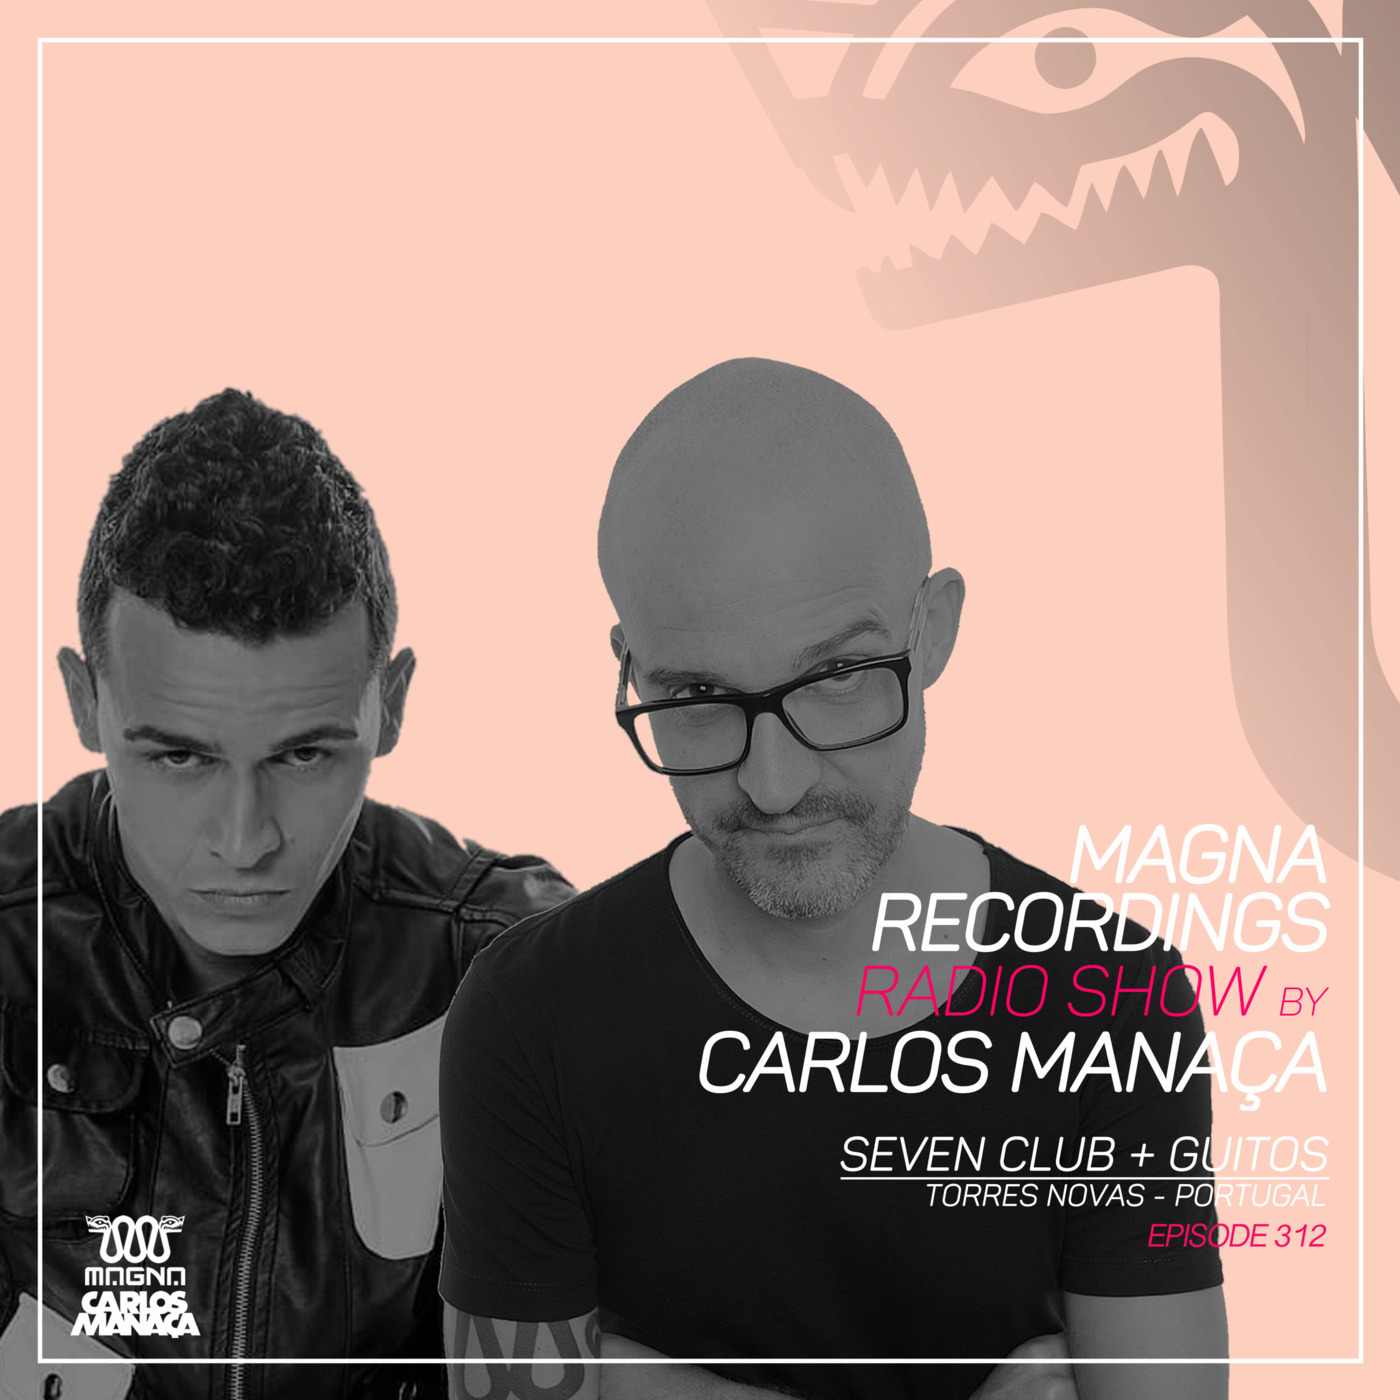 Episode 136: Magna Recordings Radio Show by Carlos Manaca 312 | Seven Club + Guitos Live [Torres Novas] Portugal